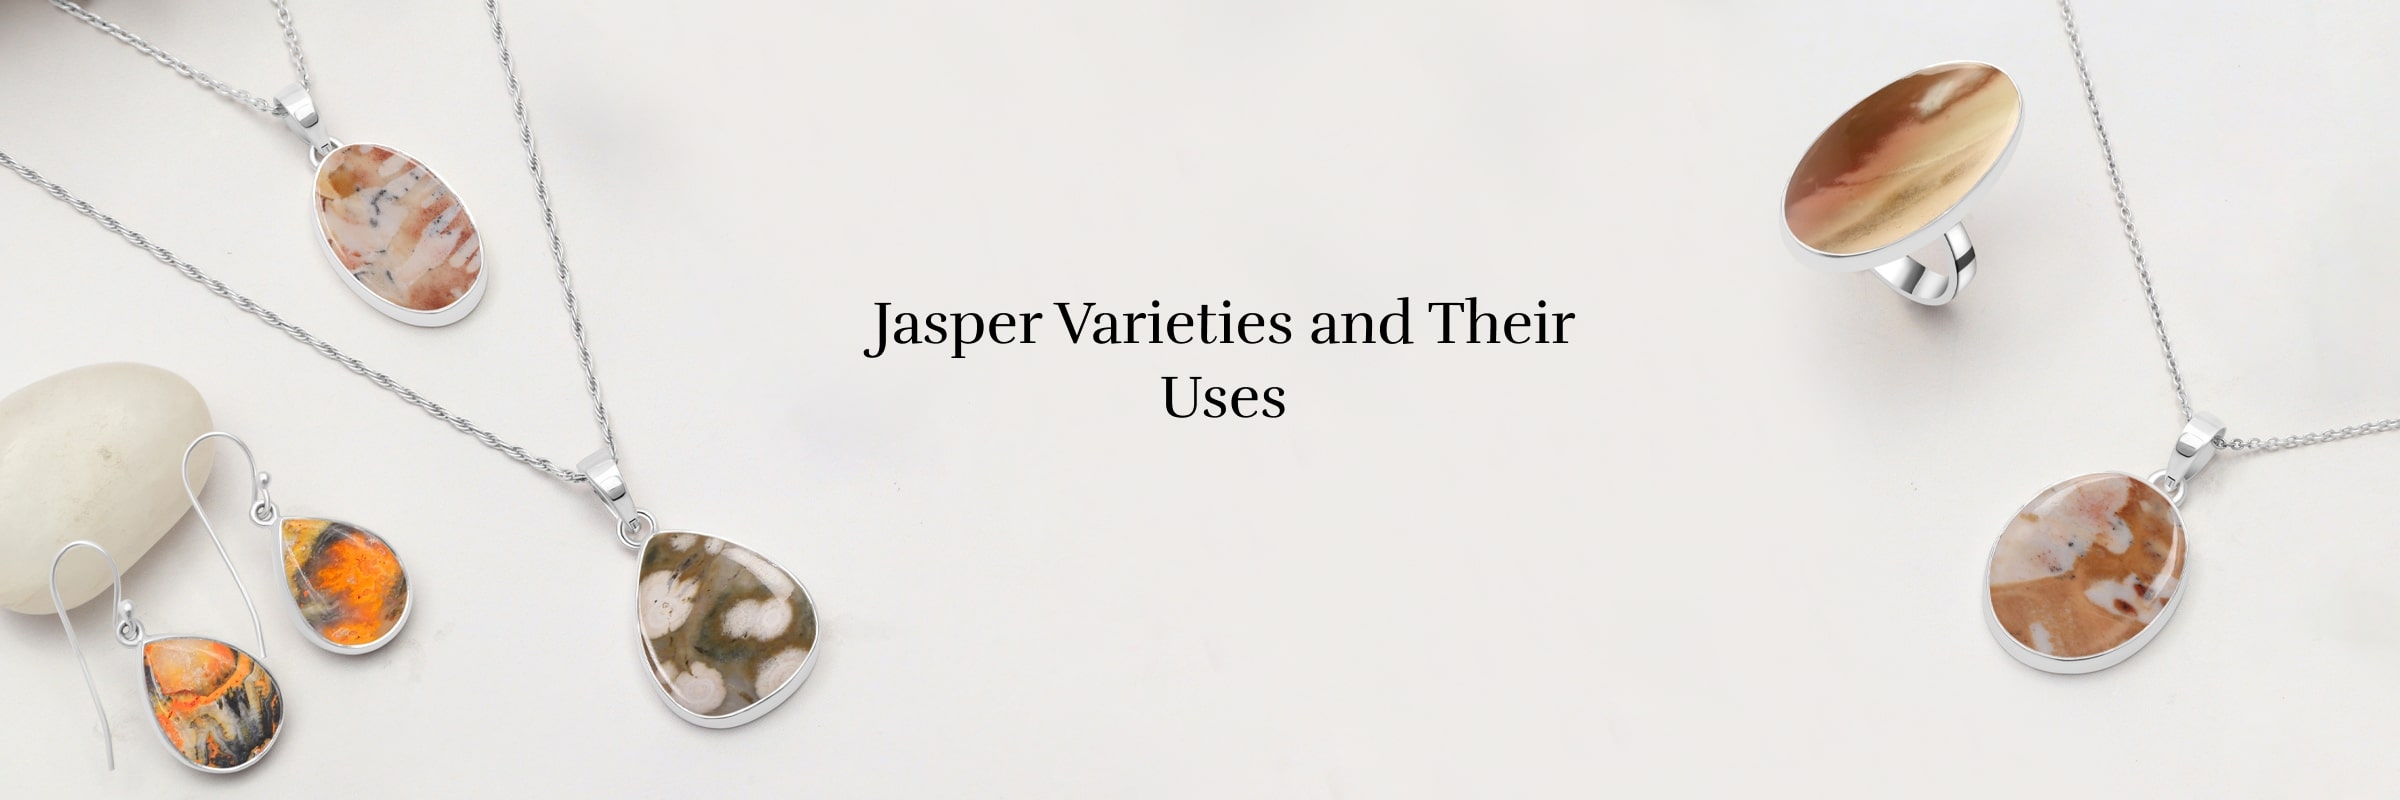 Types of Jasper